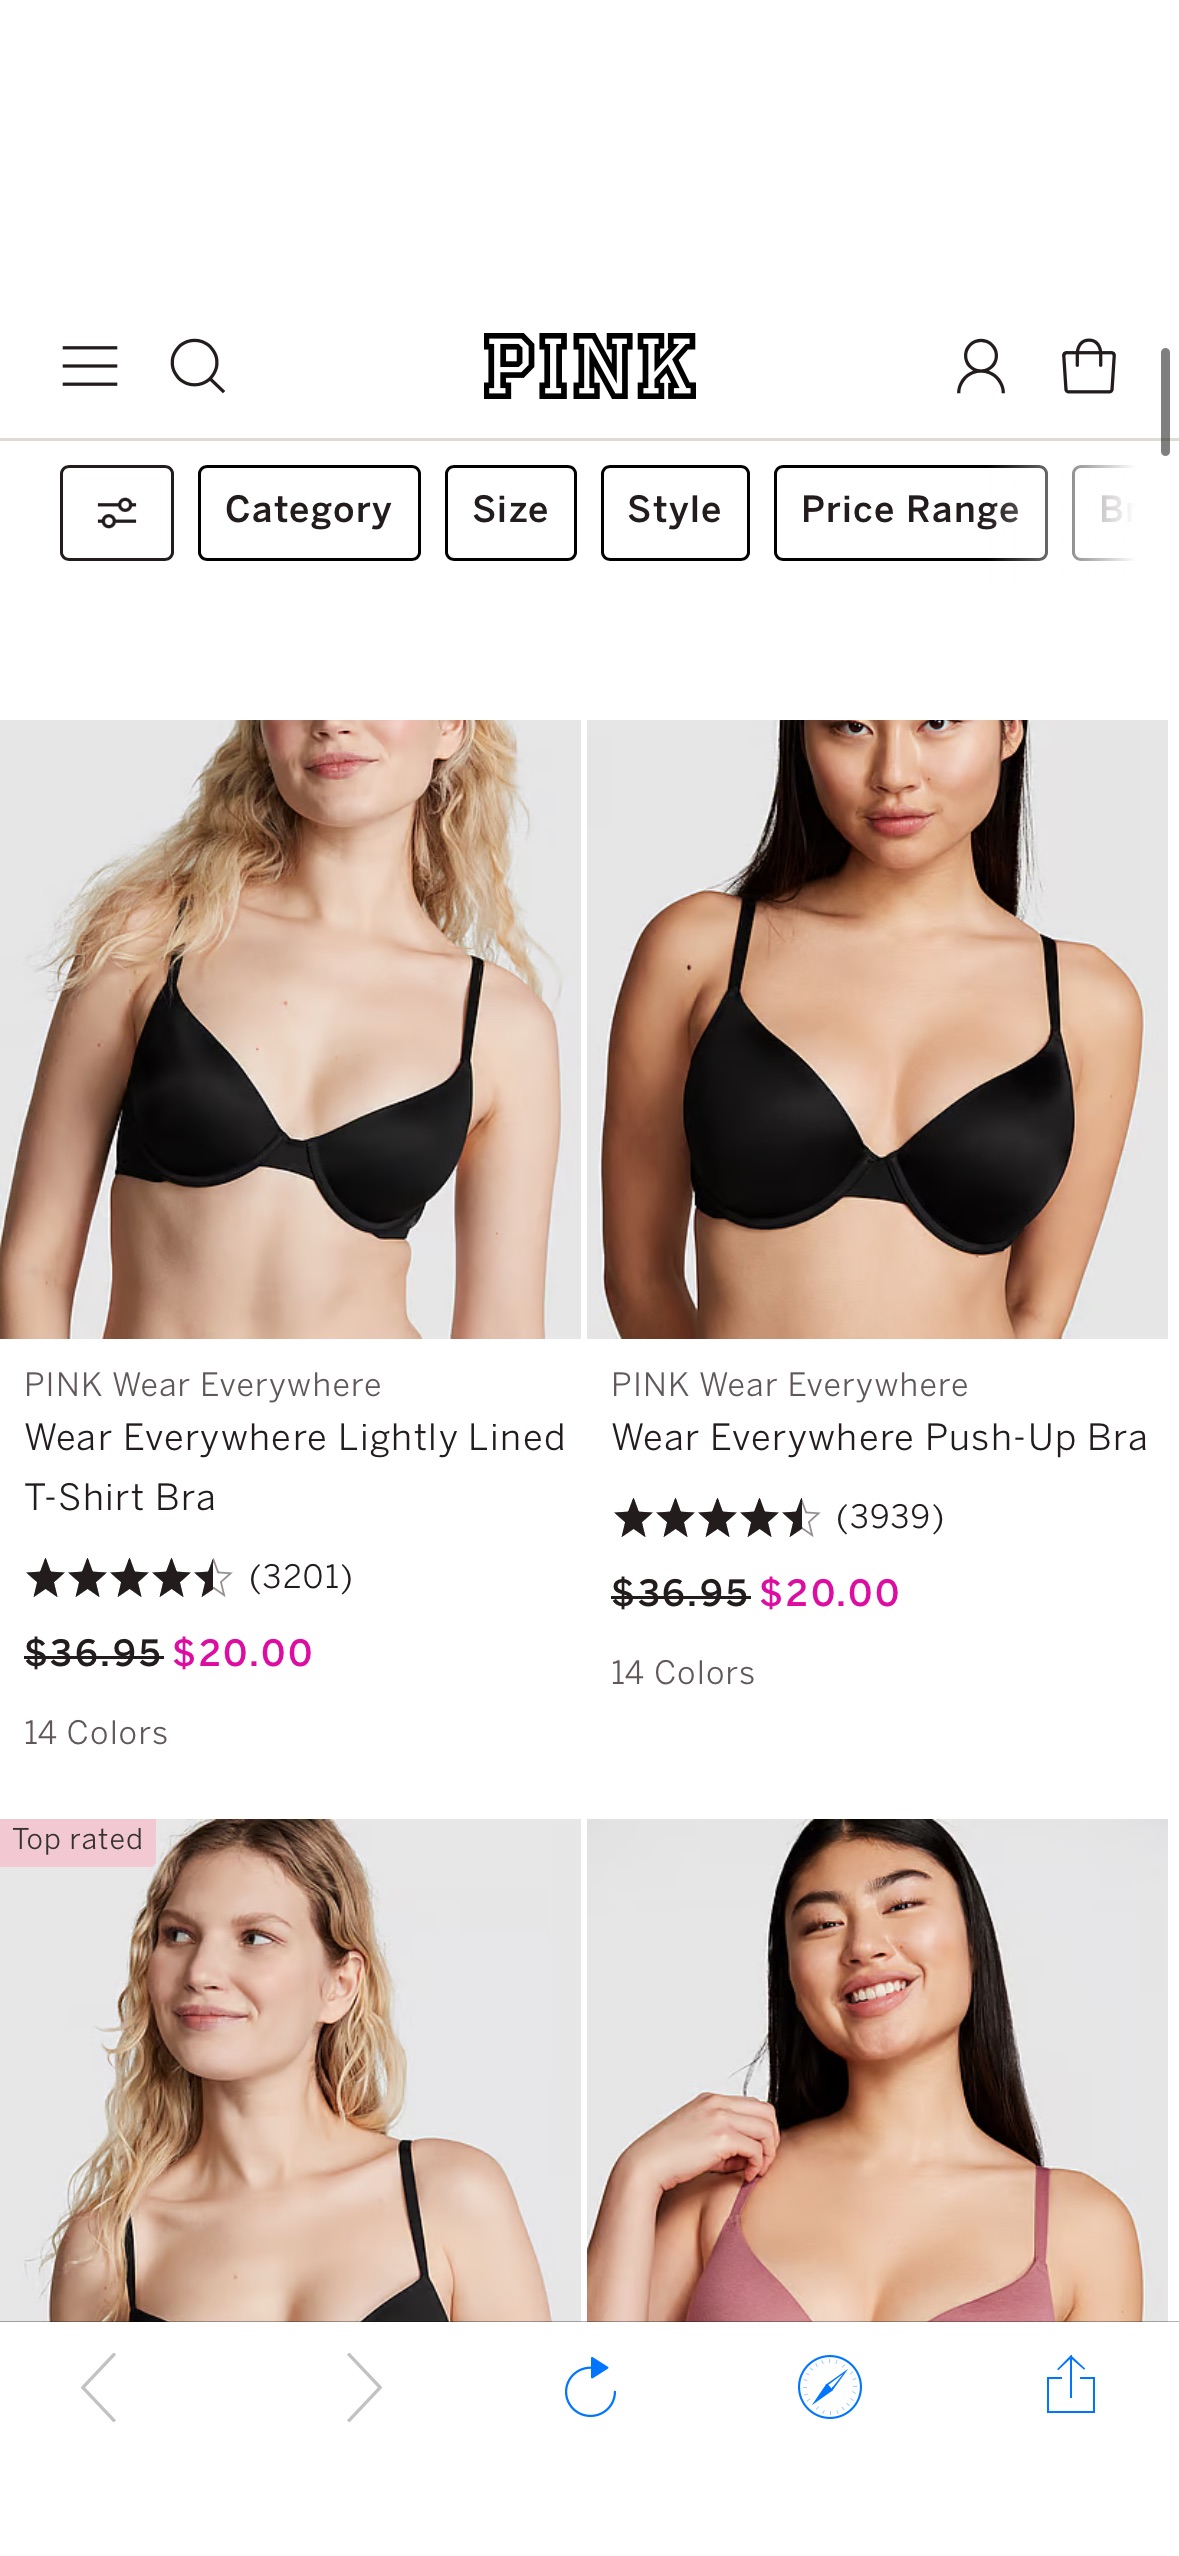 Victoria’s Secret PINK Wear Everywhere Bras Only $20